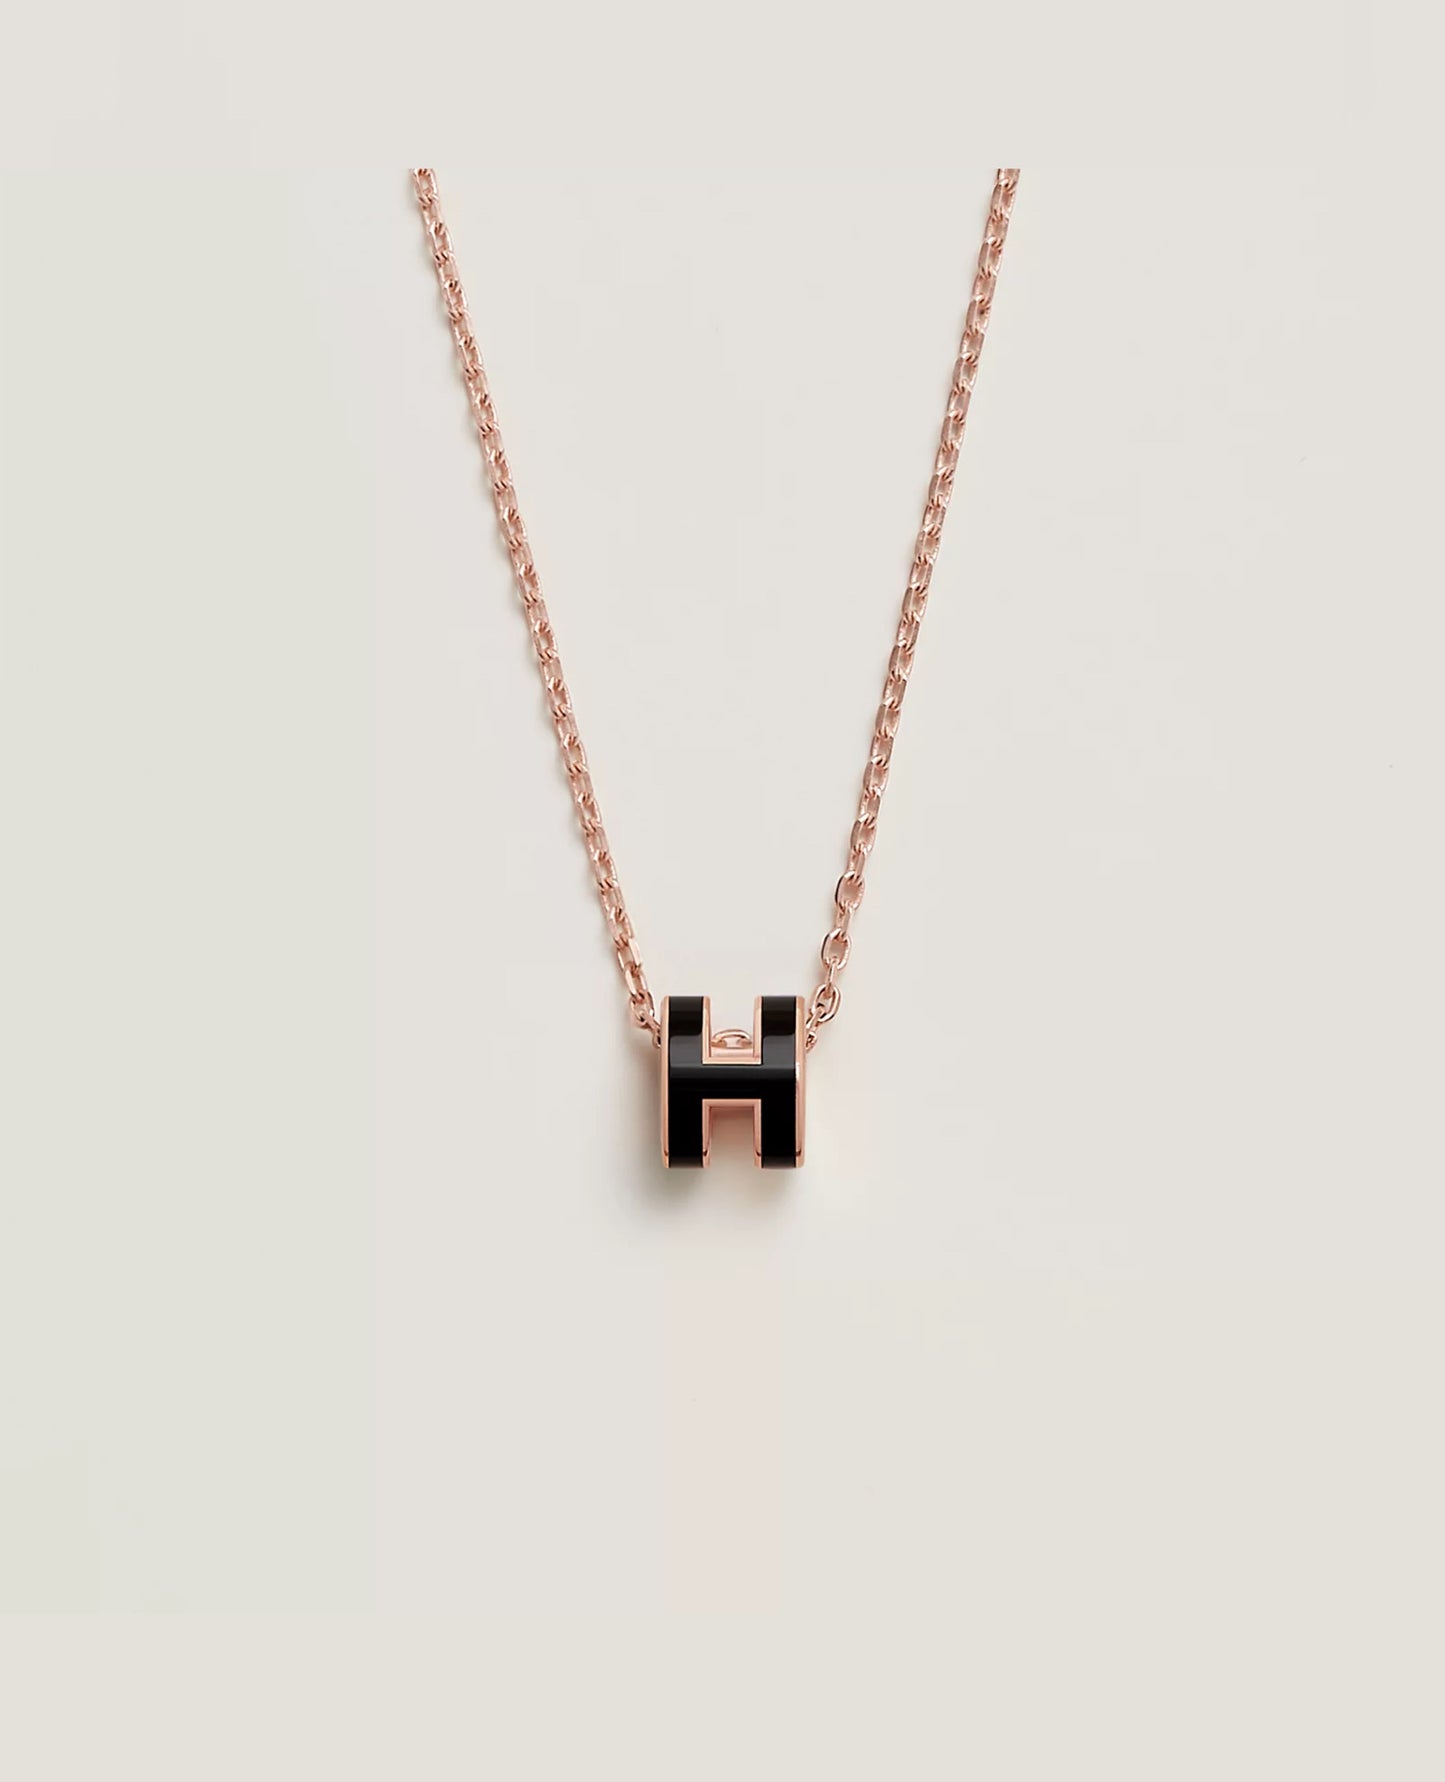 Hermès Mini Pop H Pendant